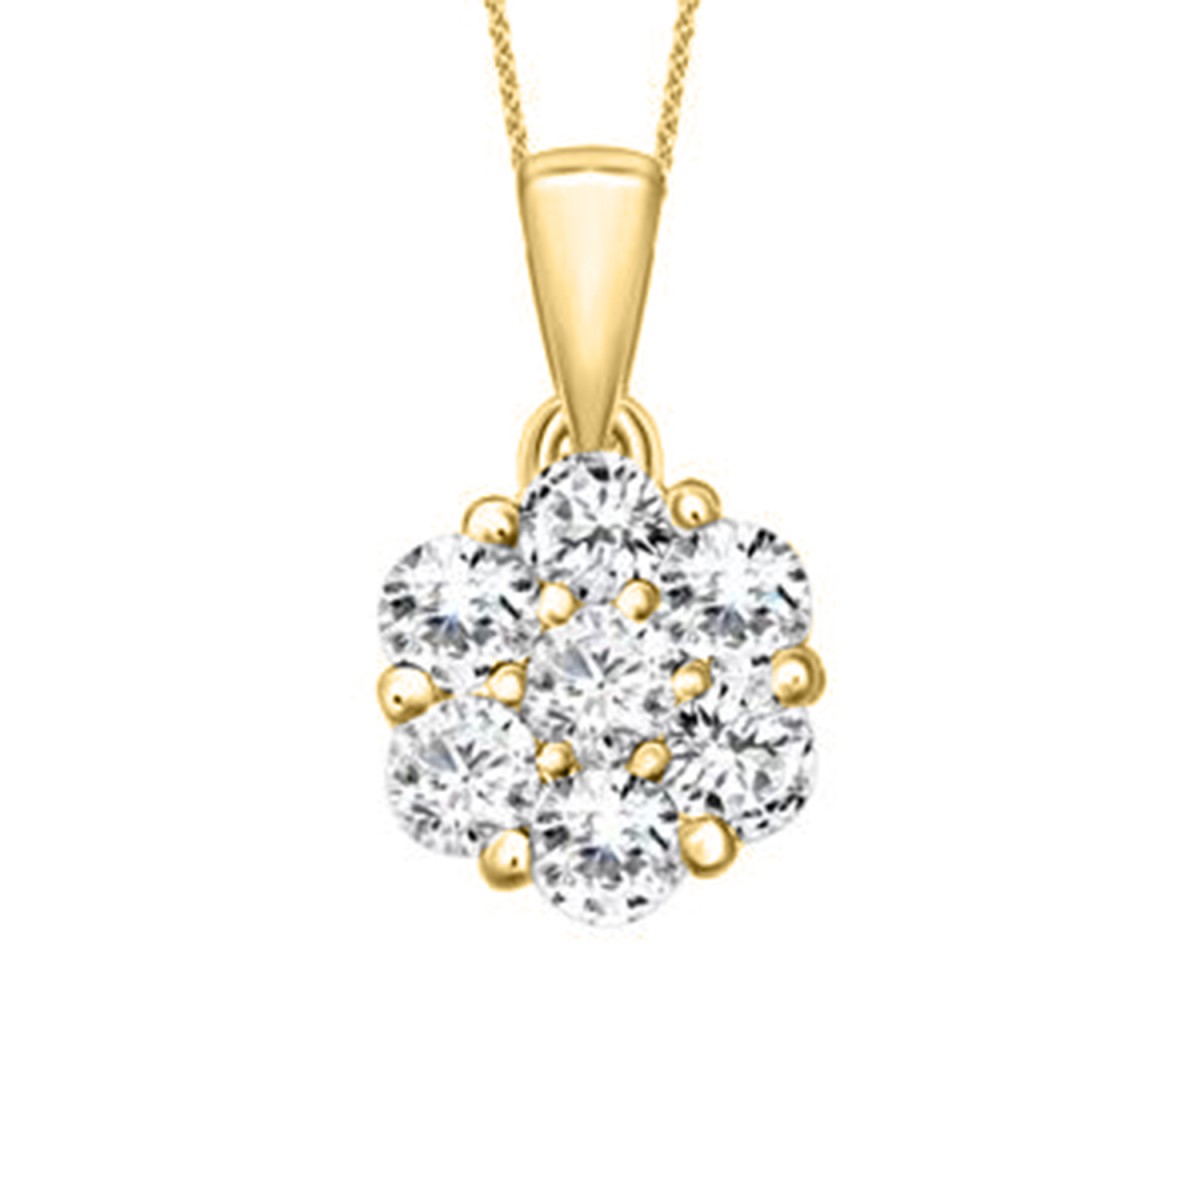 14K YELLOW GOLD 1/6CT ROUND DIAMOND LADIES PENDANT WITH CHAIN 